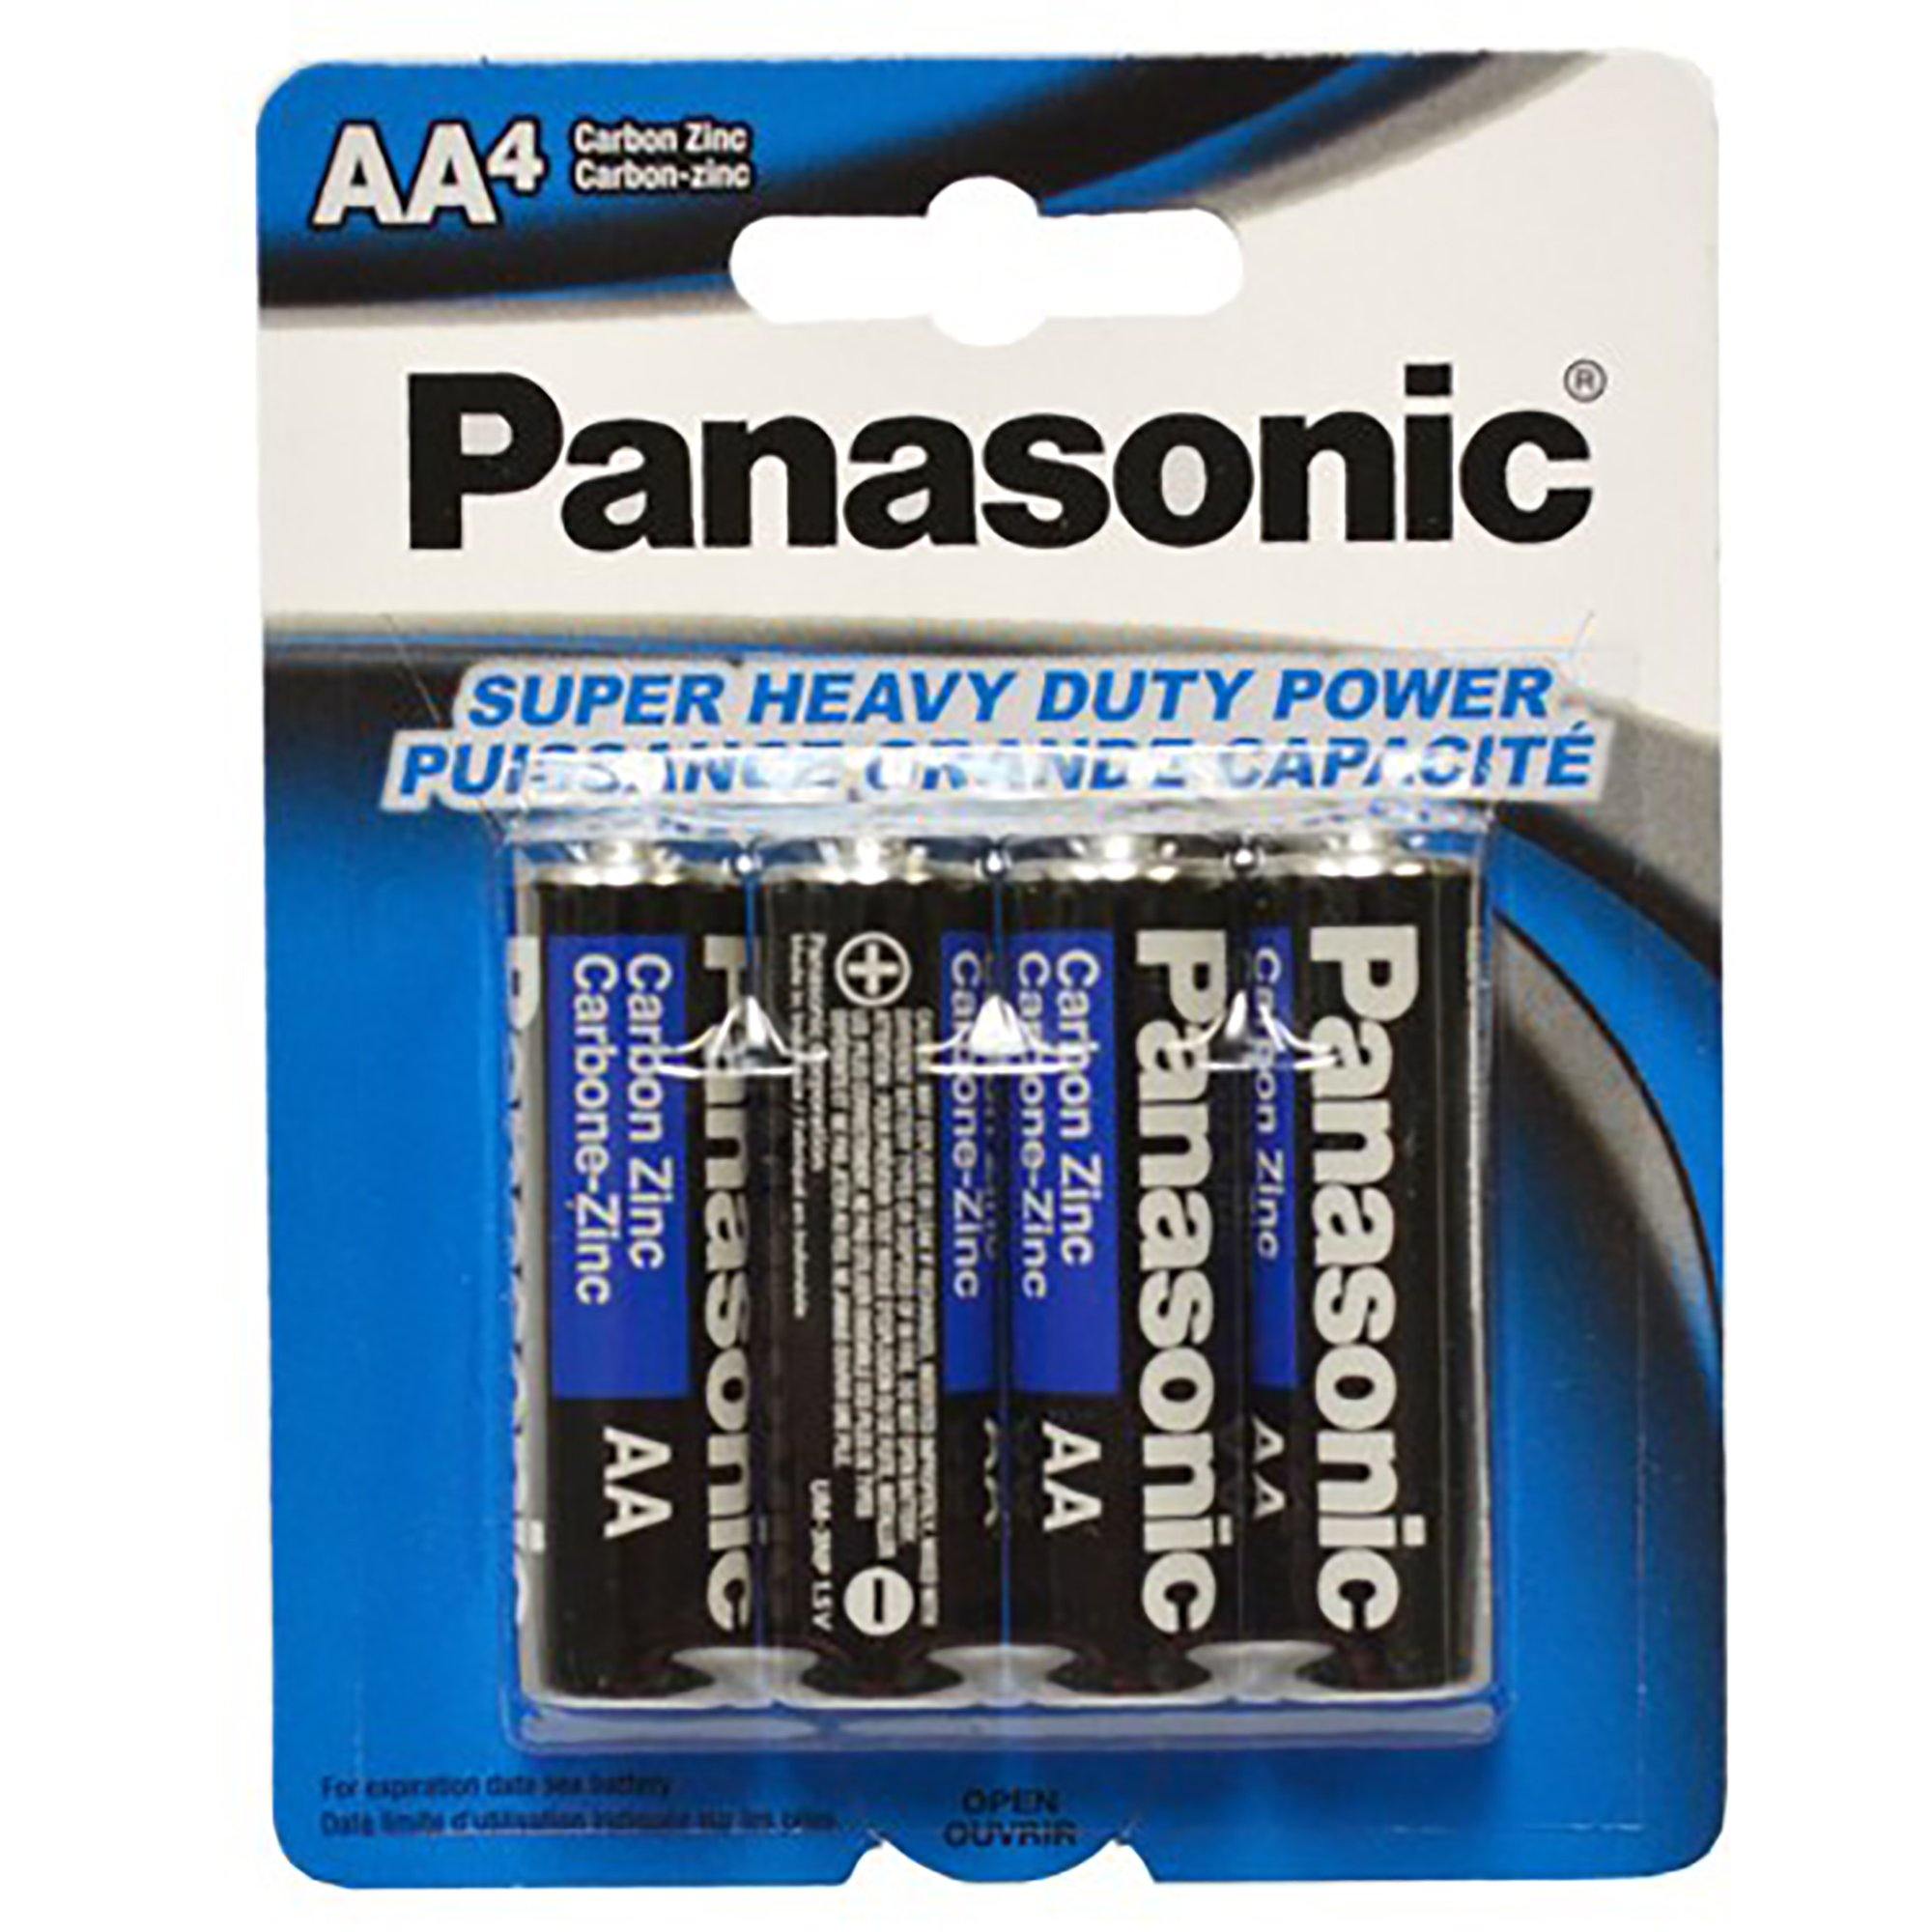 Panasonic Batteries Aa (4) - Dollar Max Dépôt